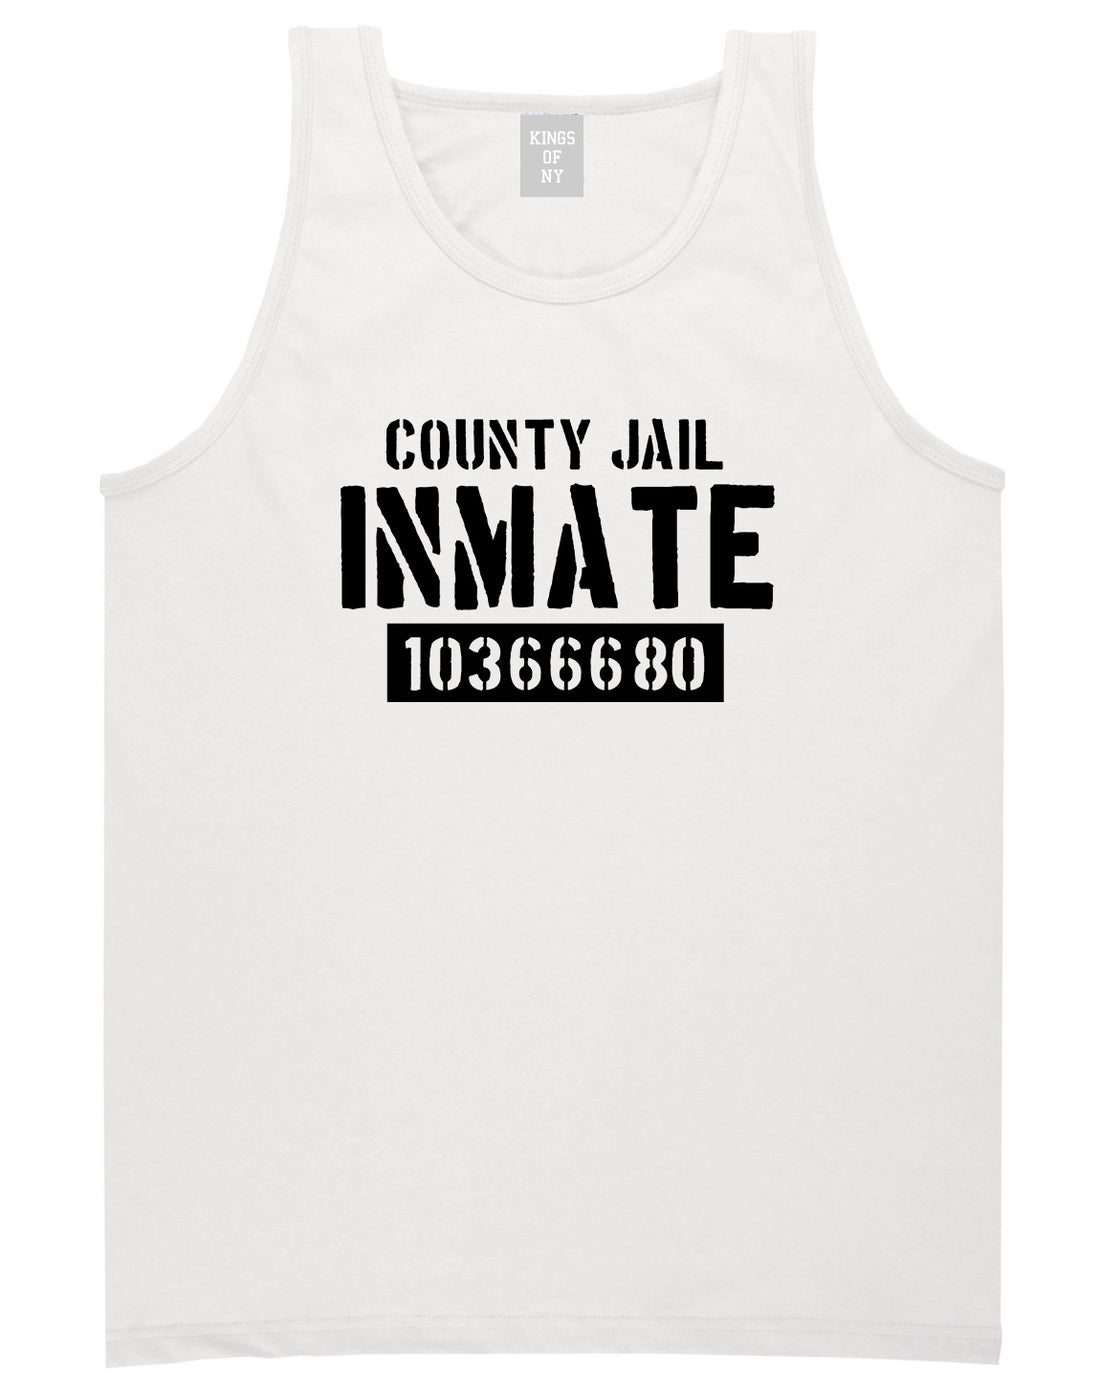 County Jail Inmate 666 Halloween Costume Mens Tank Top Shirt White